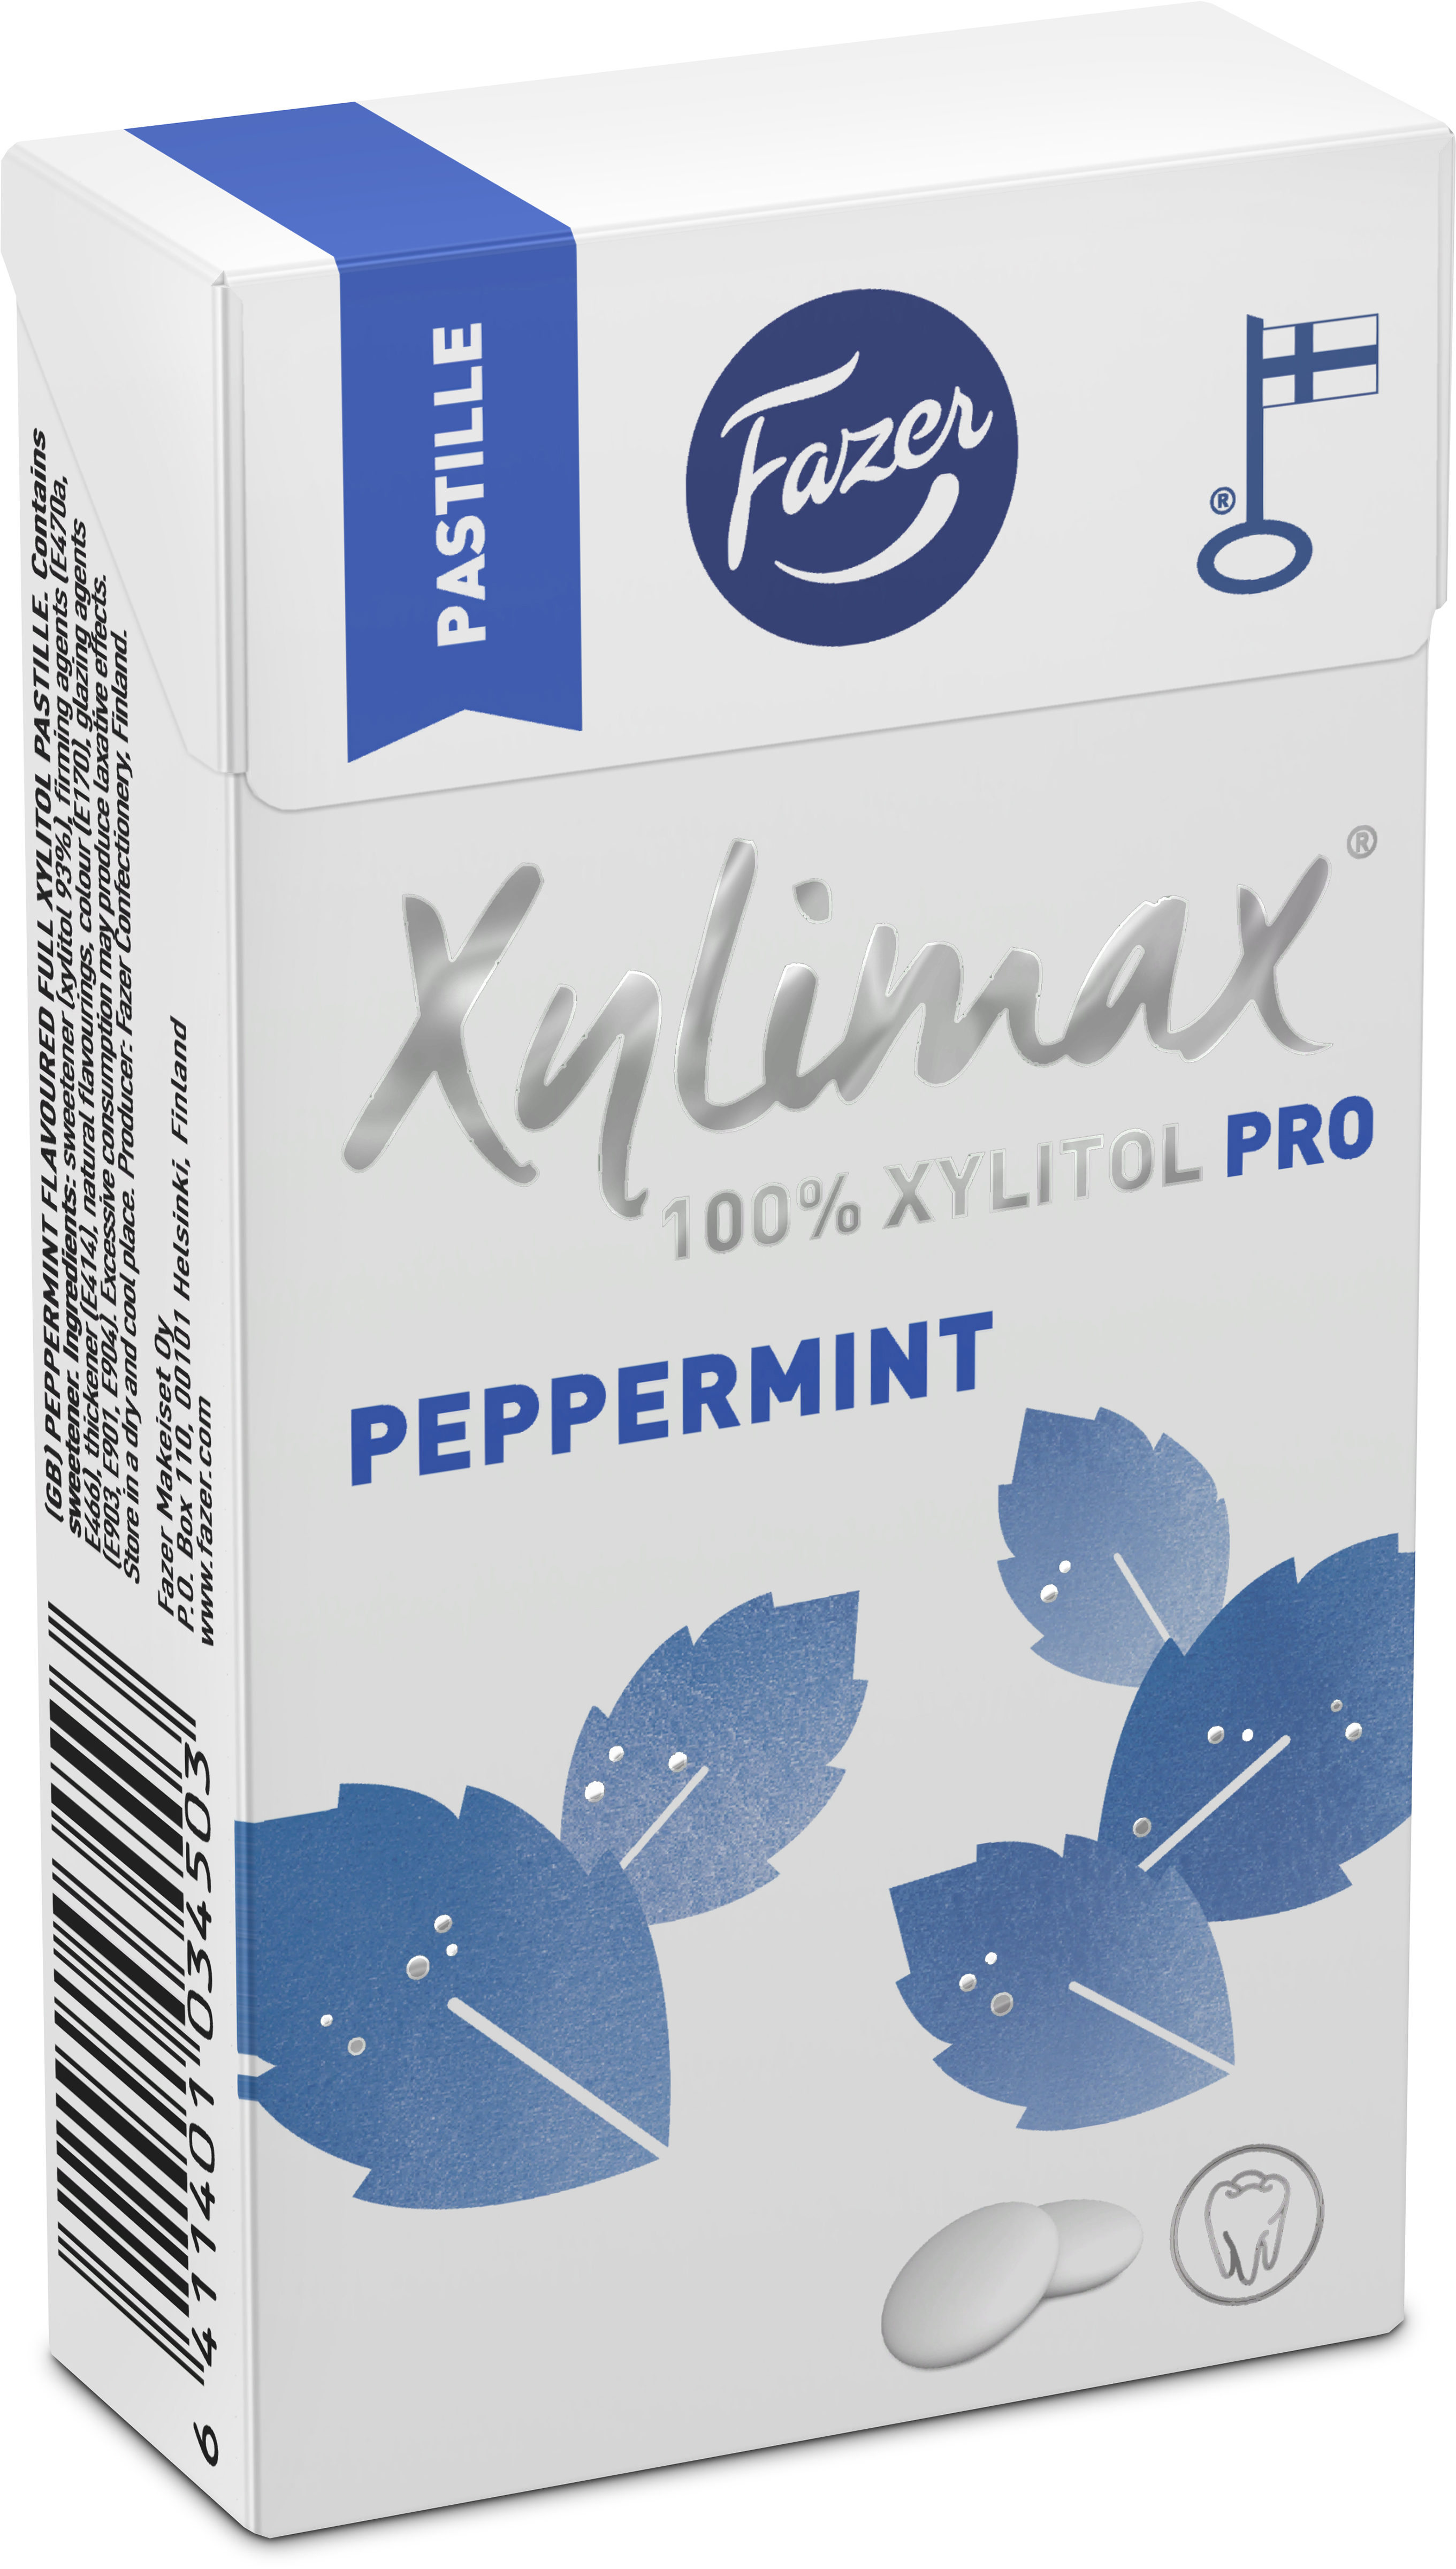 Xylimax Peppermint täysksylitolipastilli 38 g 